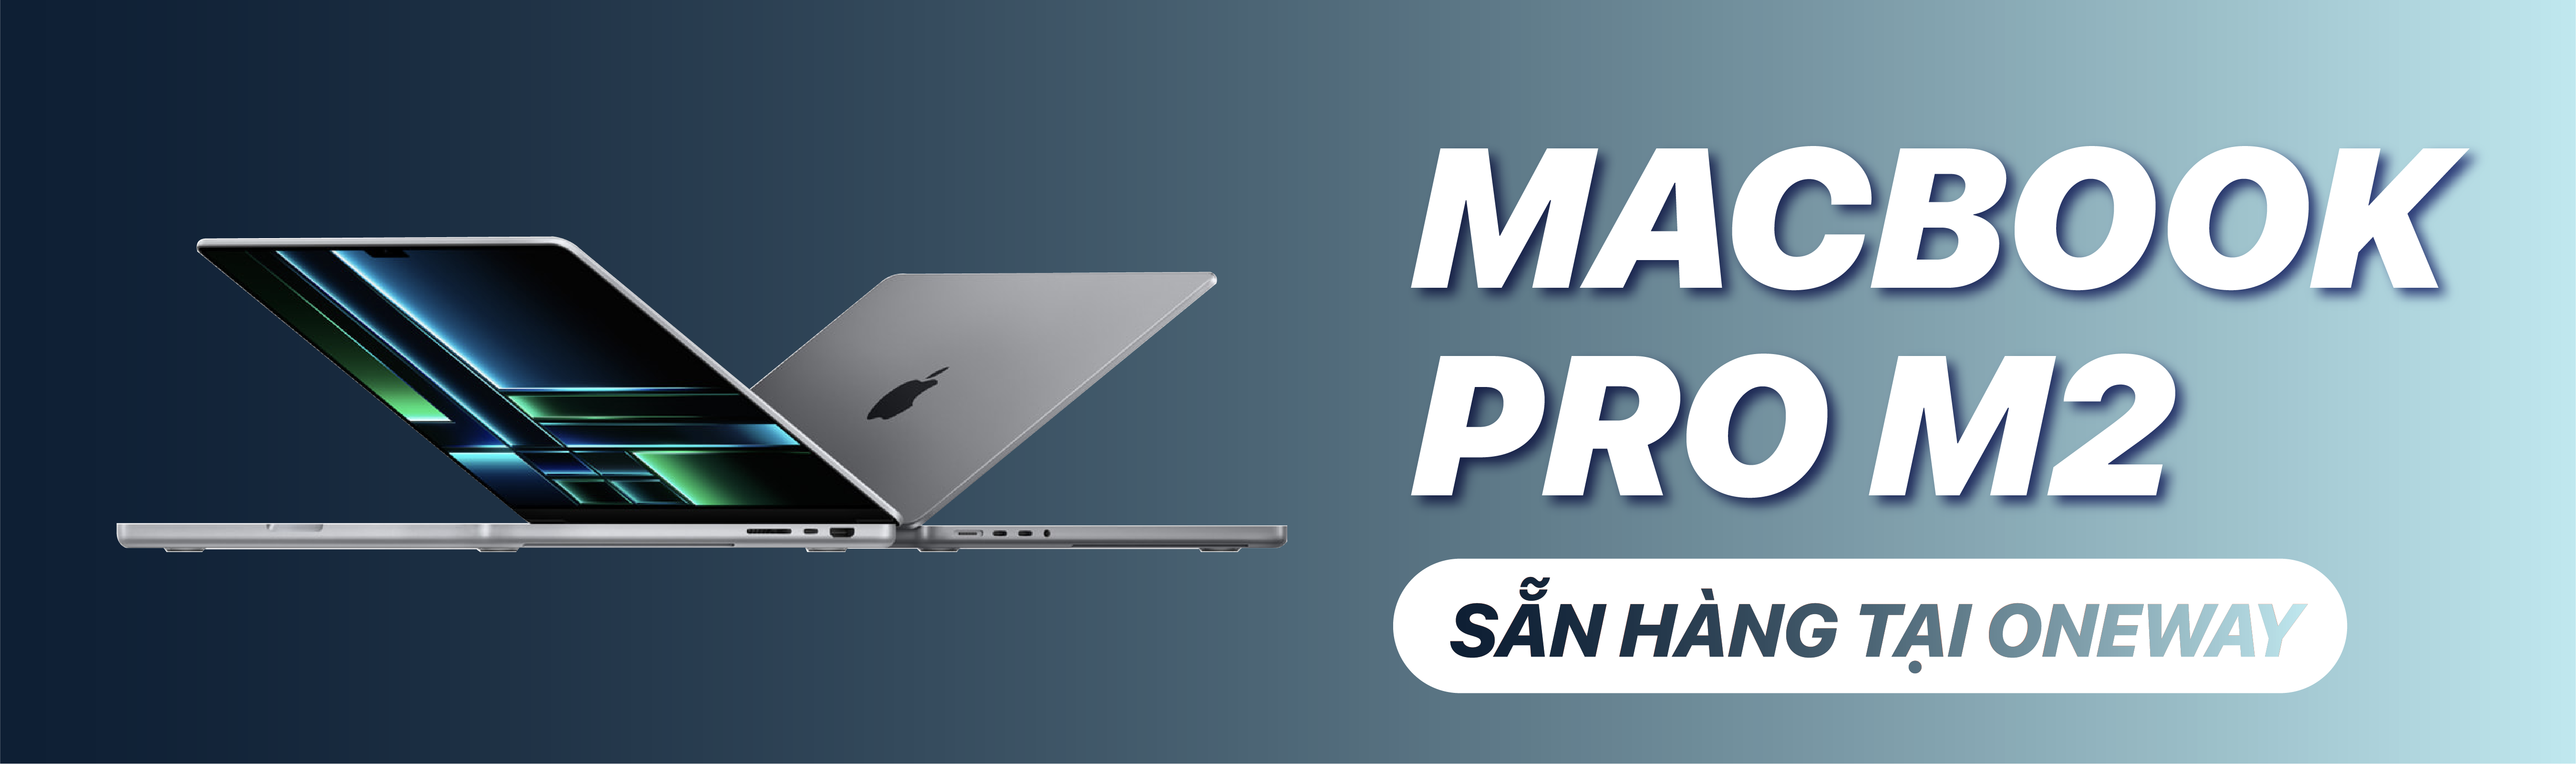 MacBook Pro M2 2023